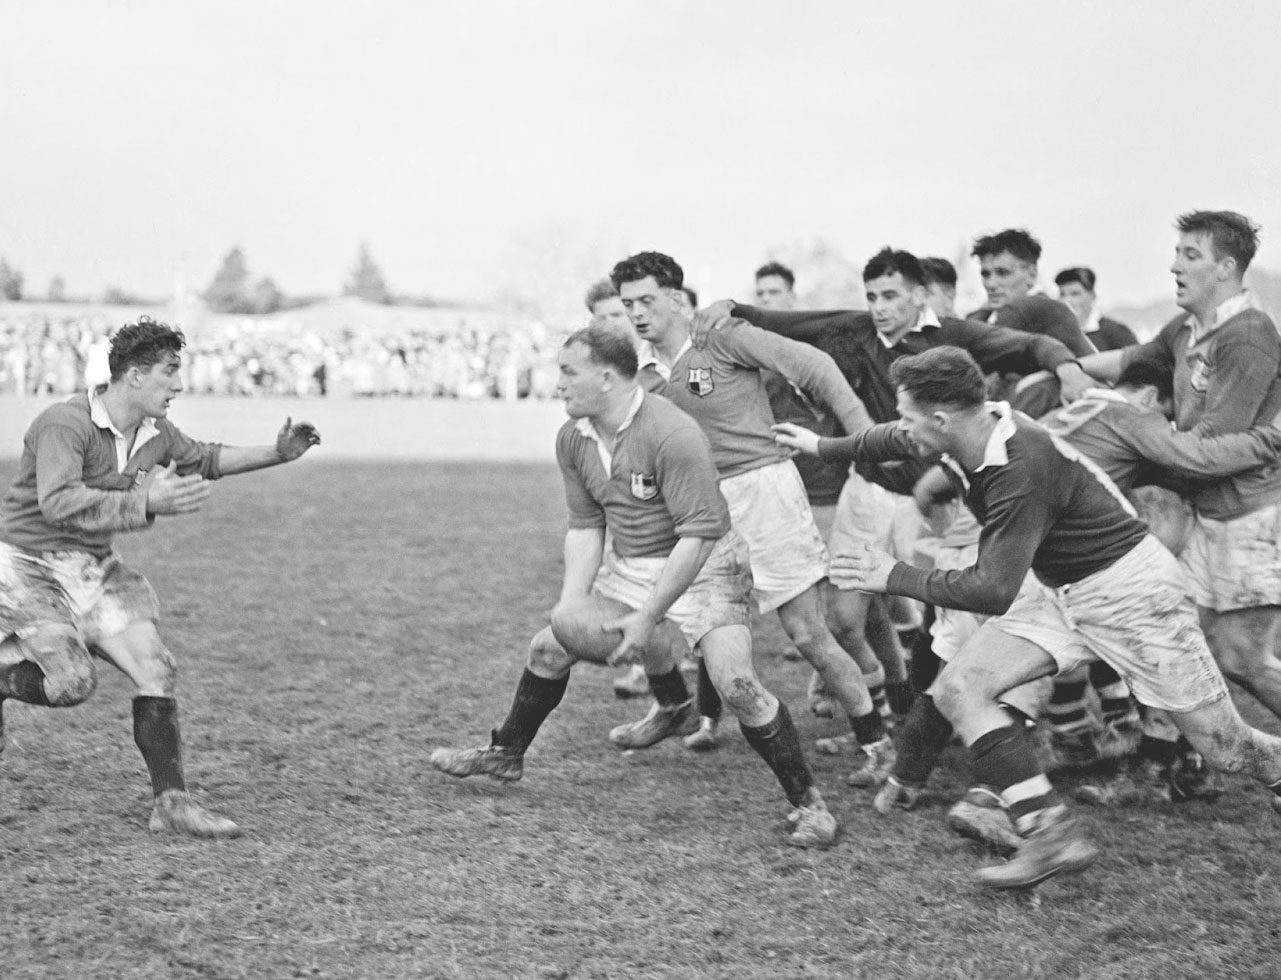 Vintage rugby game photo